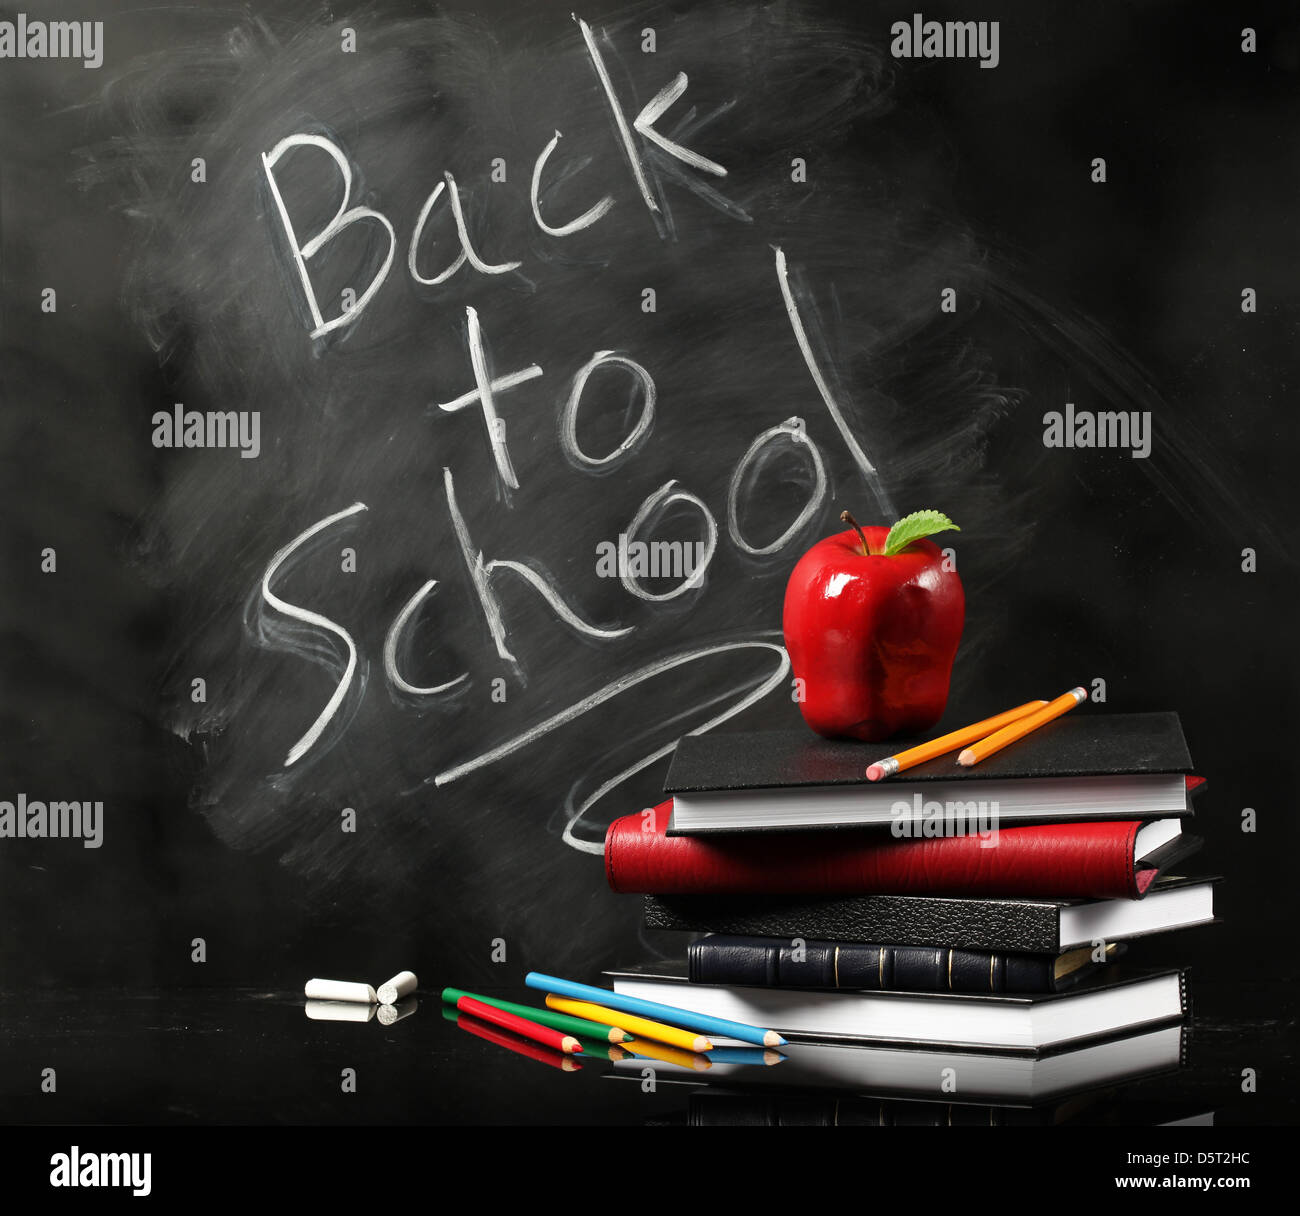 Back to school Stock Photo